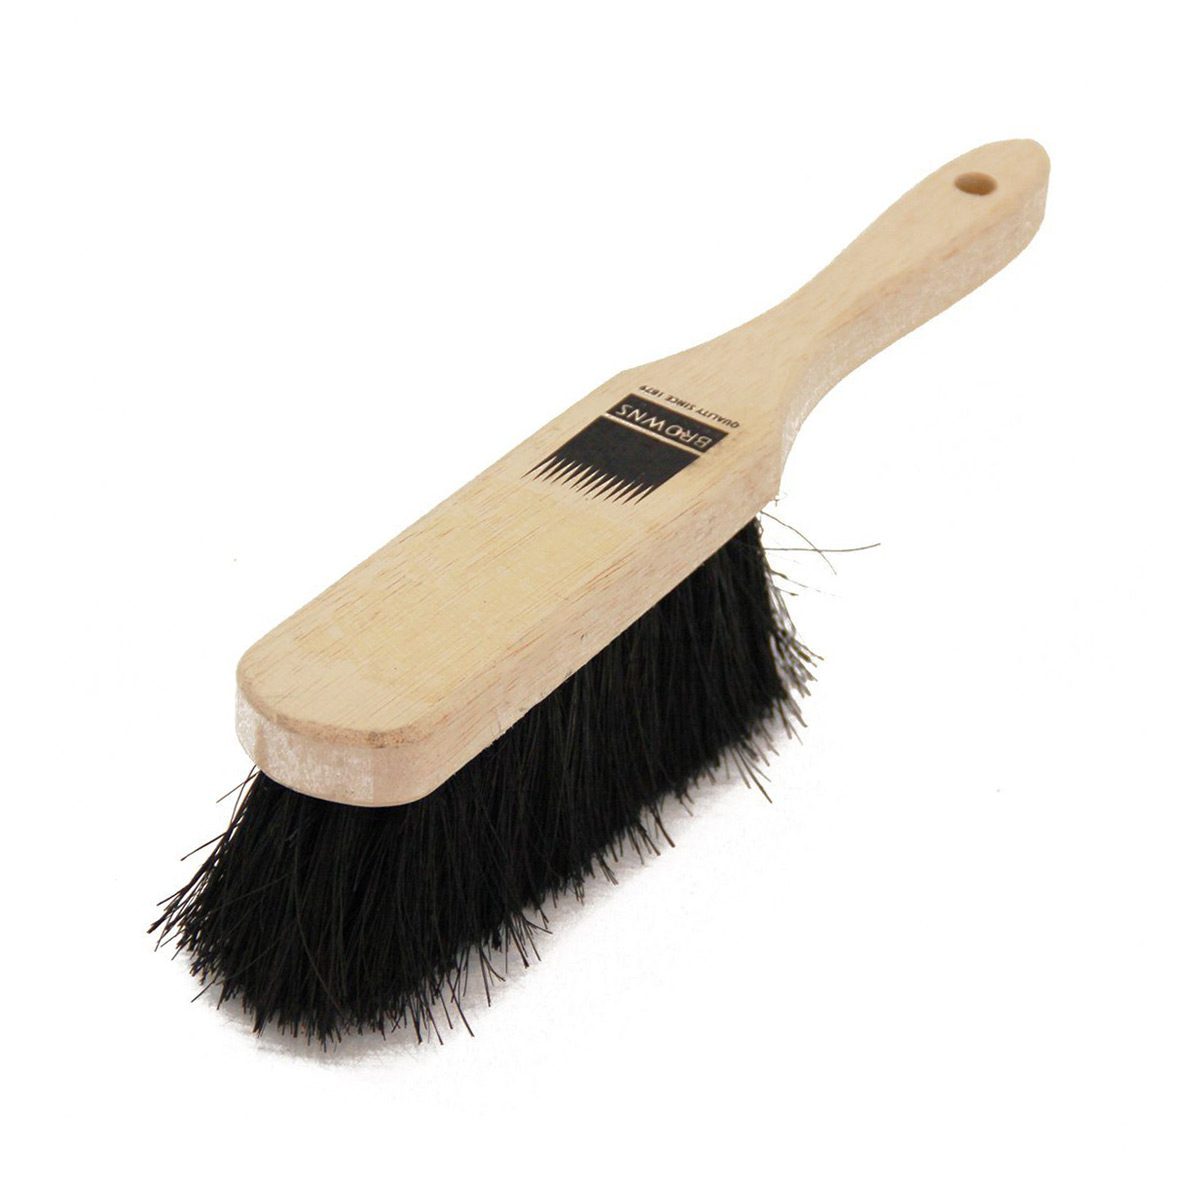 cleaning-equipment-brushware-wooden-stock-banister-brush-vegetable-fibre-bristle-vjs-distributors-RBAD033